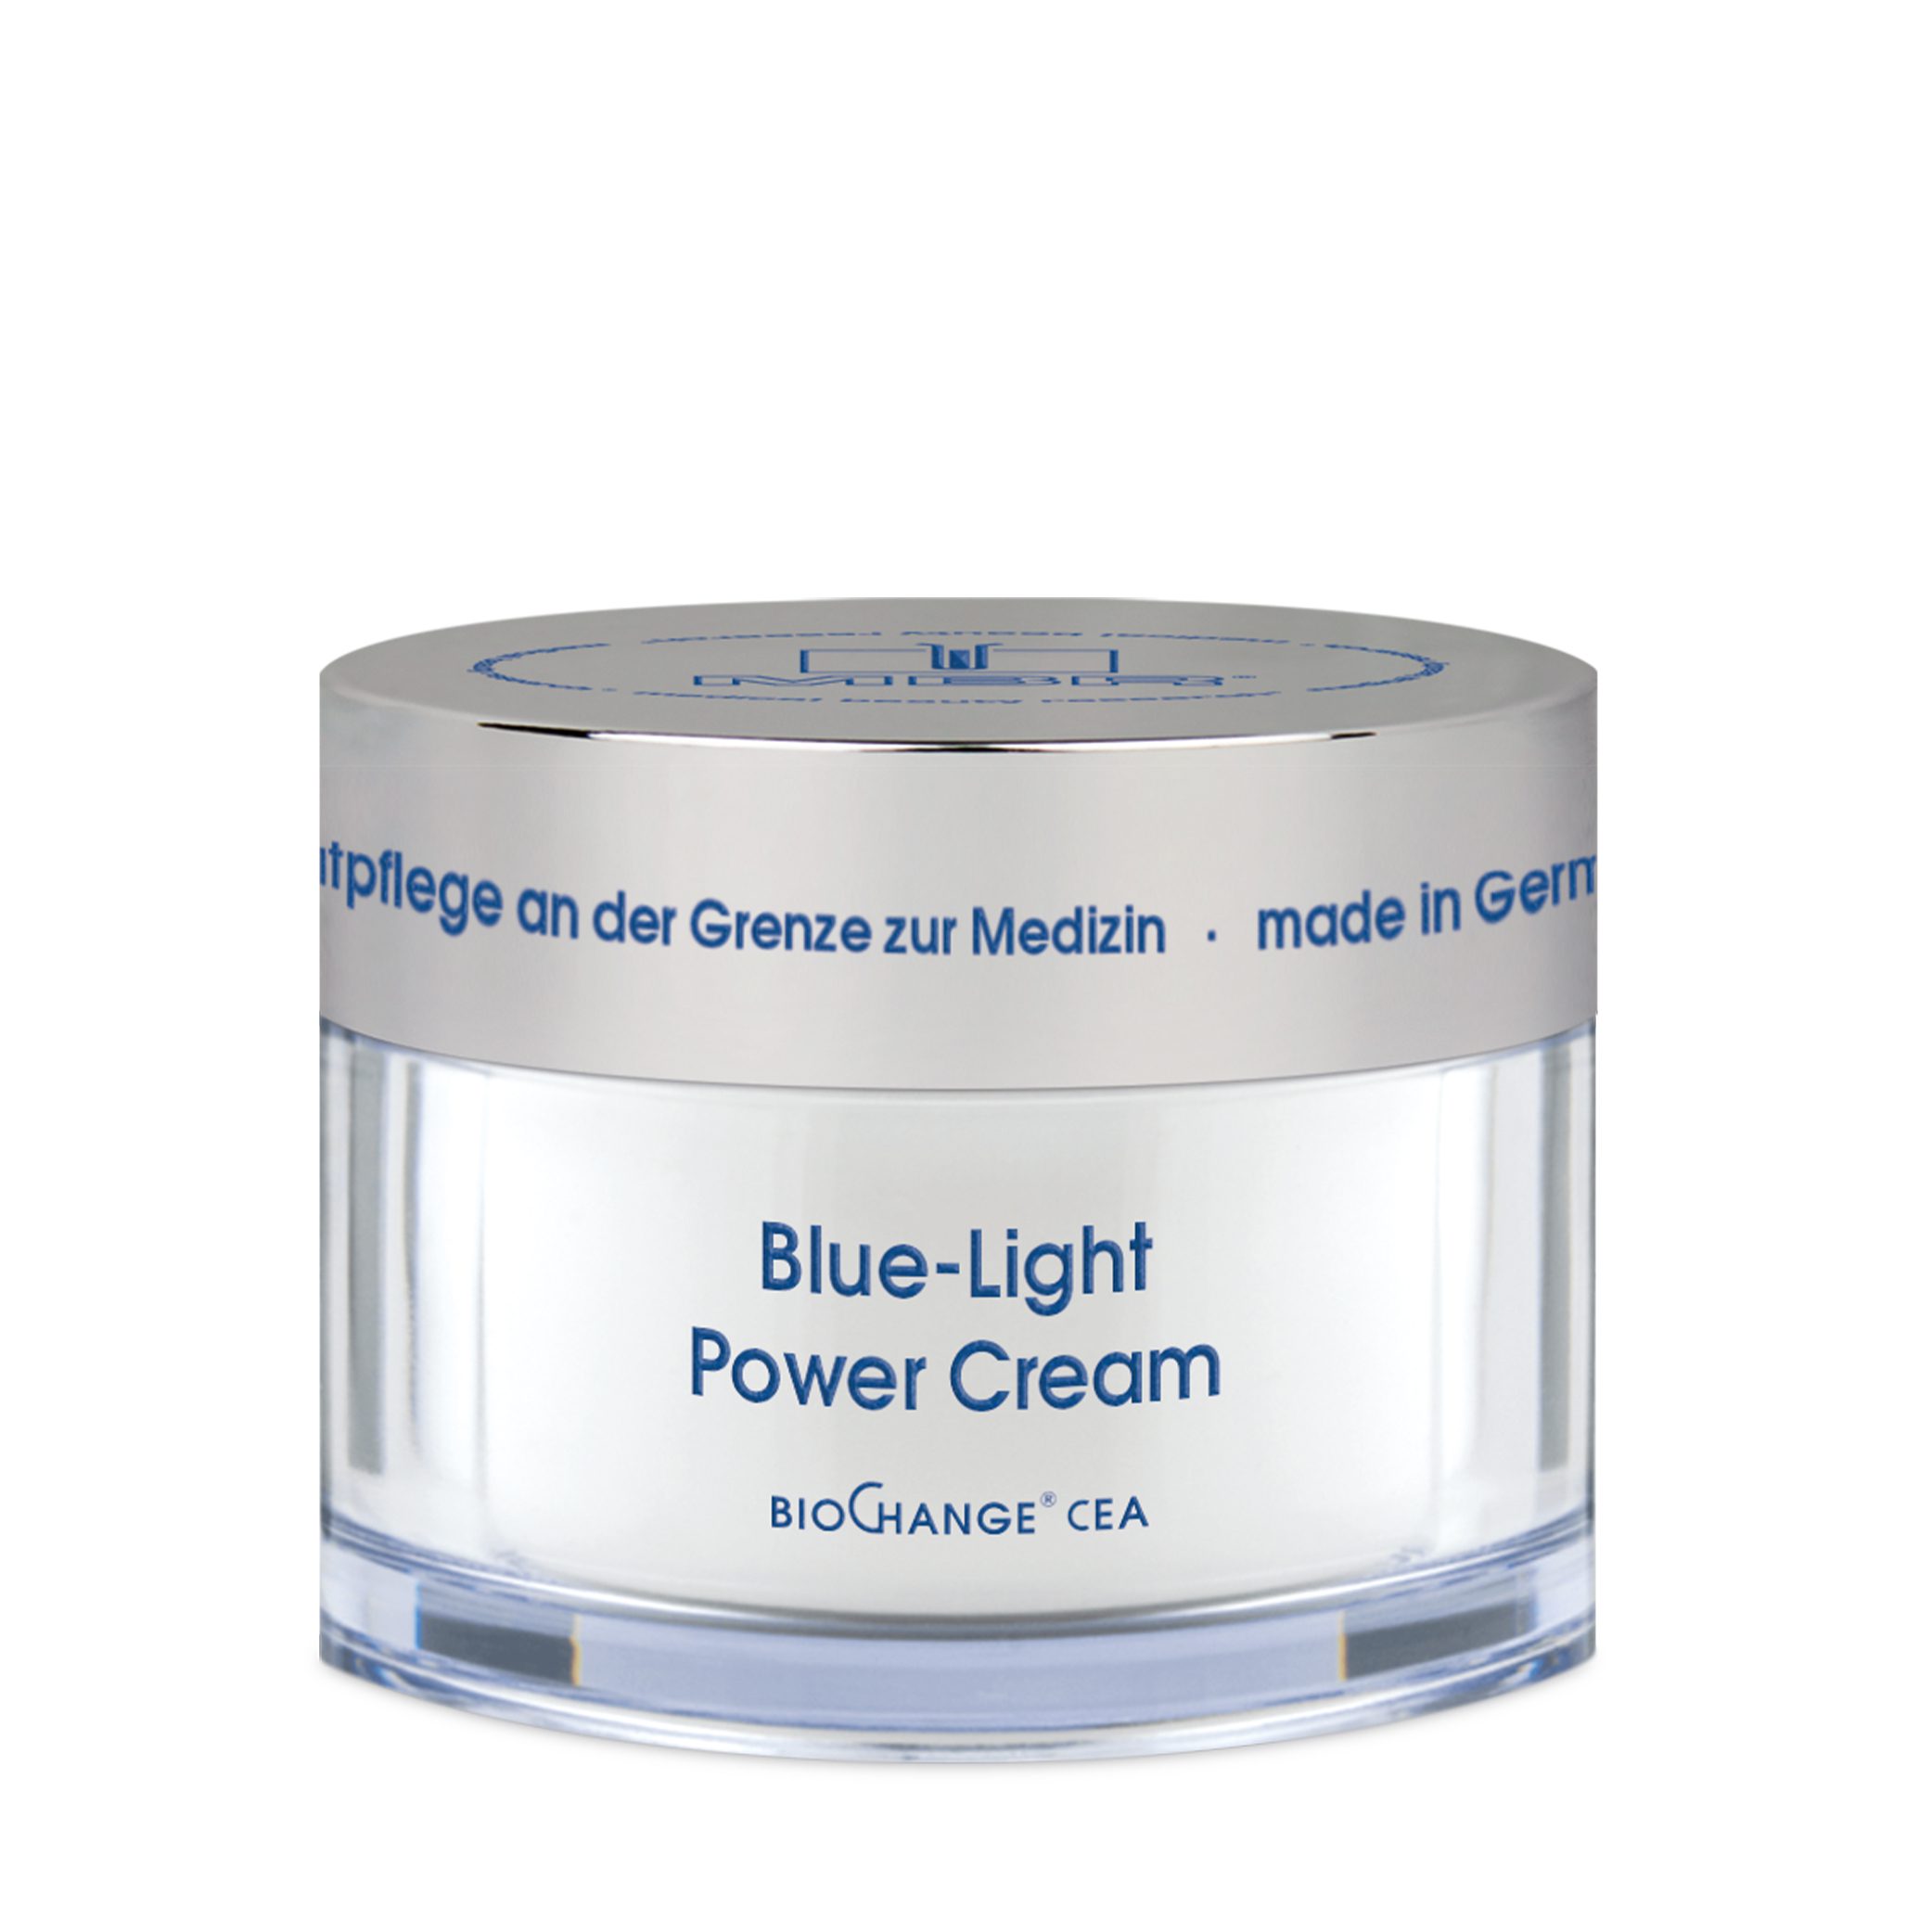 MBR Blue-Light Power Cream